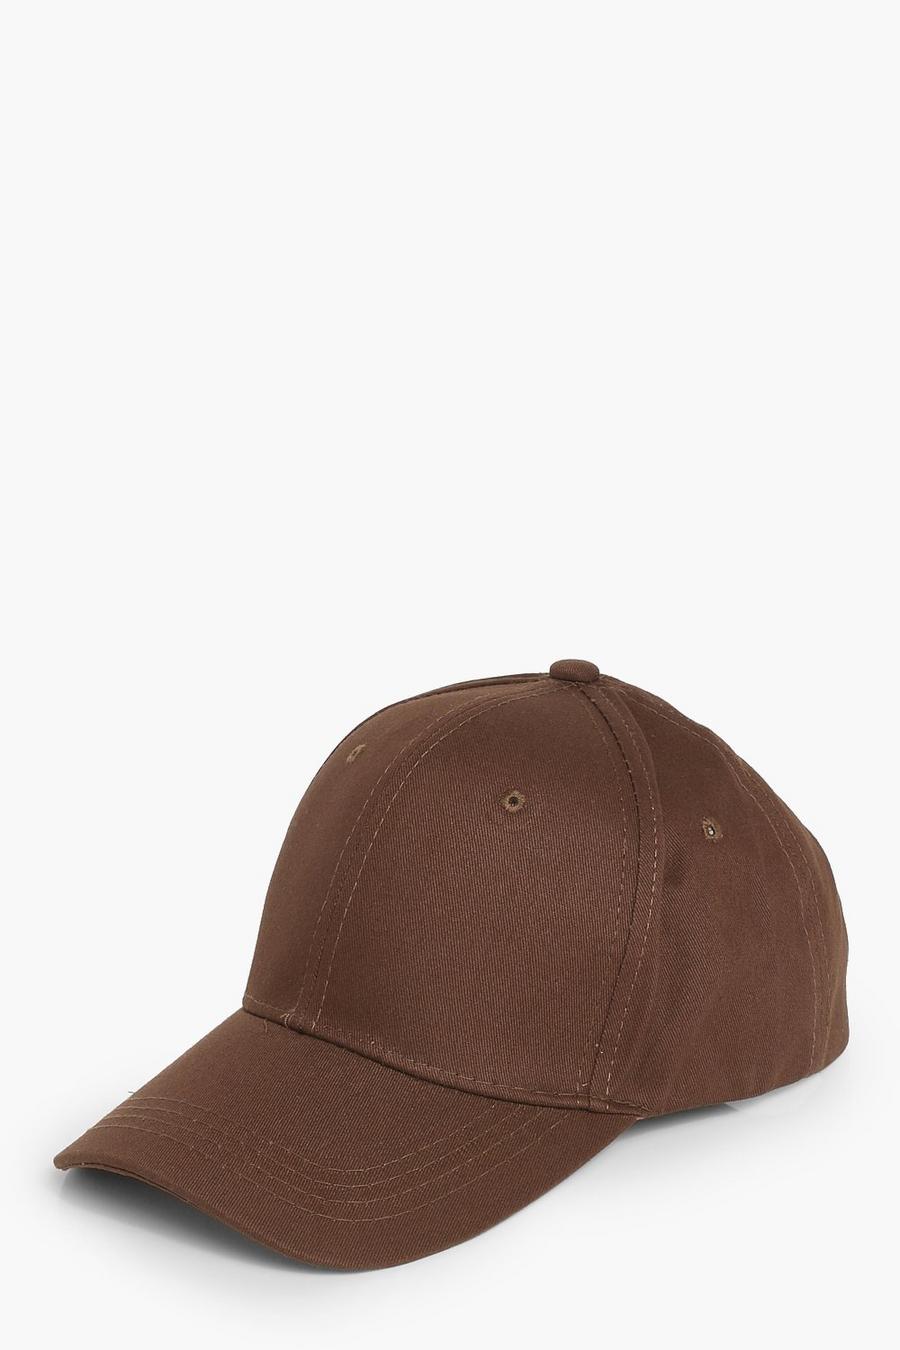 Chocolate brown Woven Baseball Cap